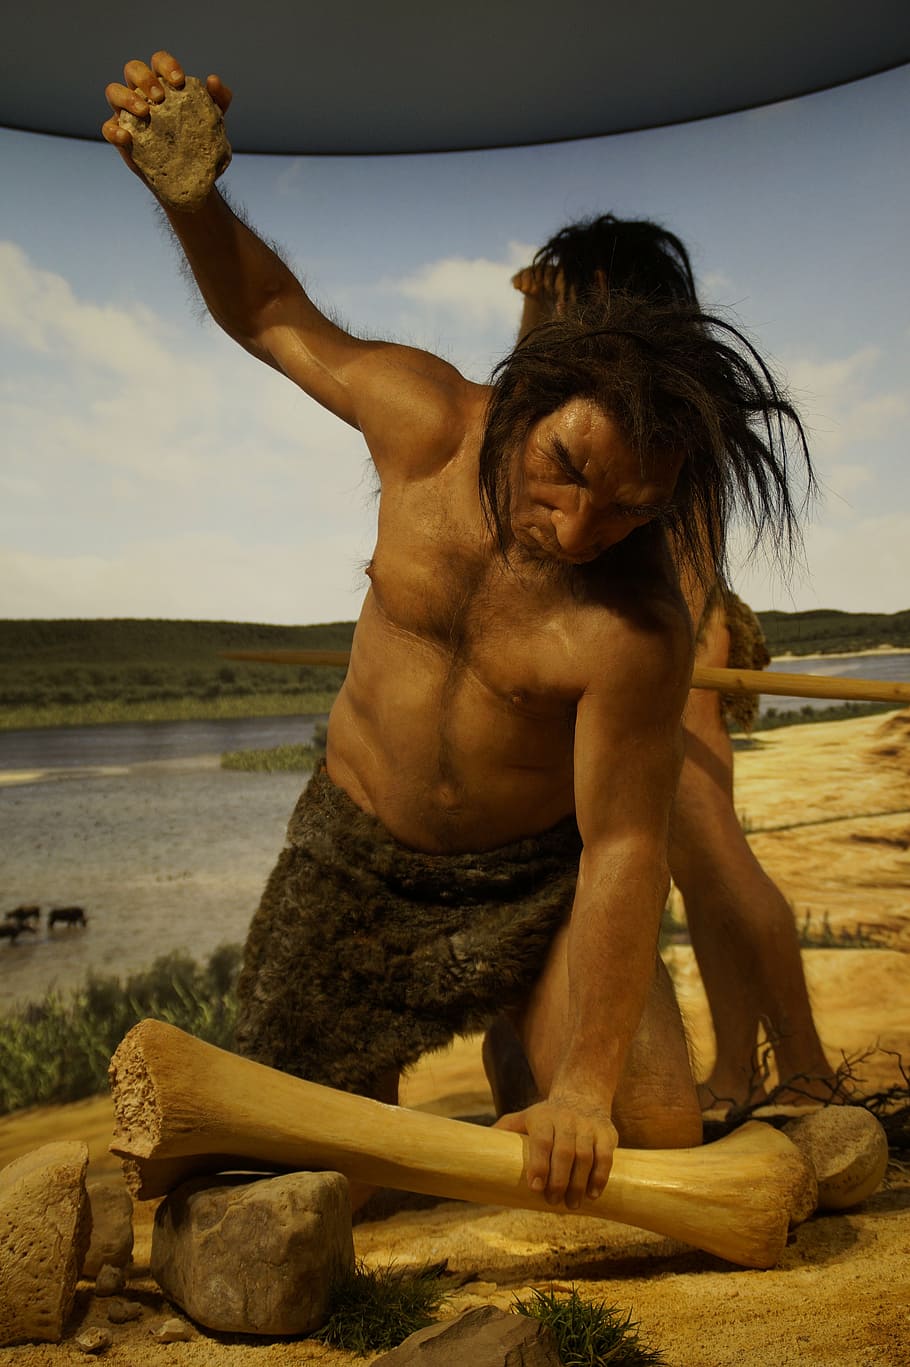 ancestor, stone age, caveman, neanderthal, hunting, hunt, museum, doll, man, evolution